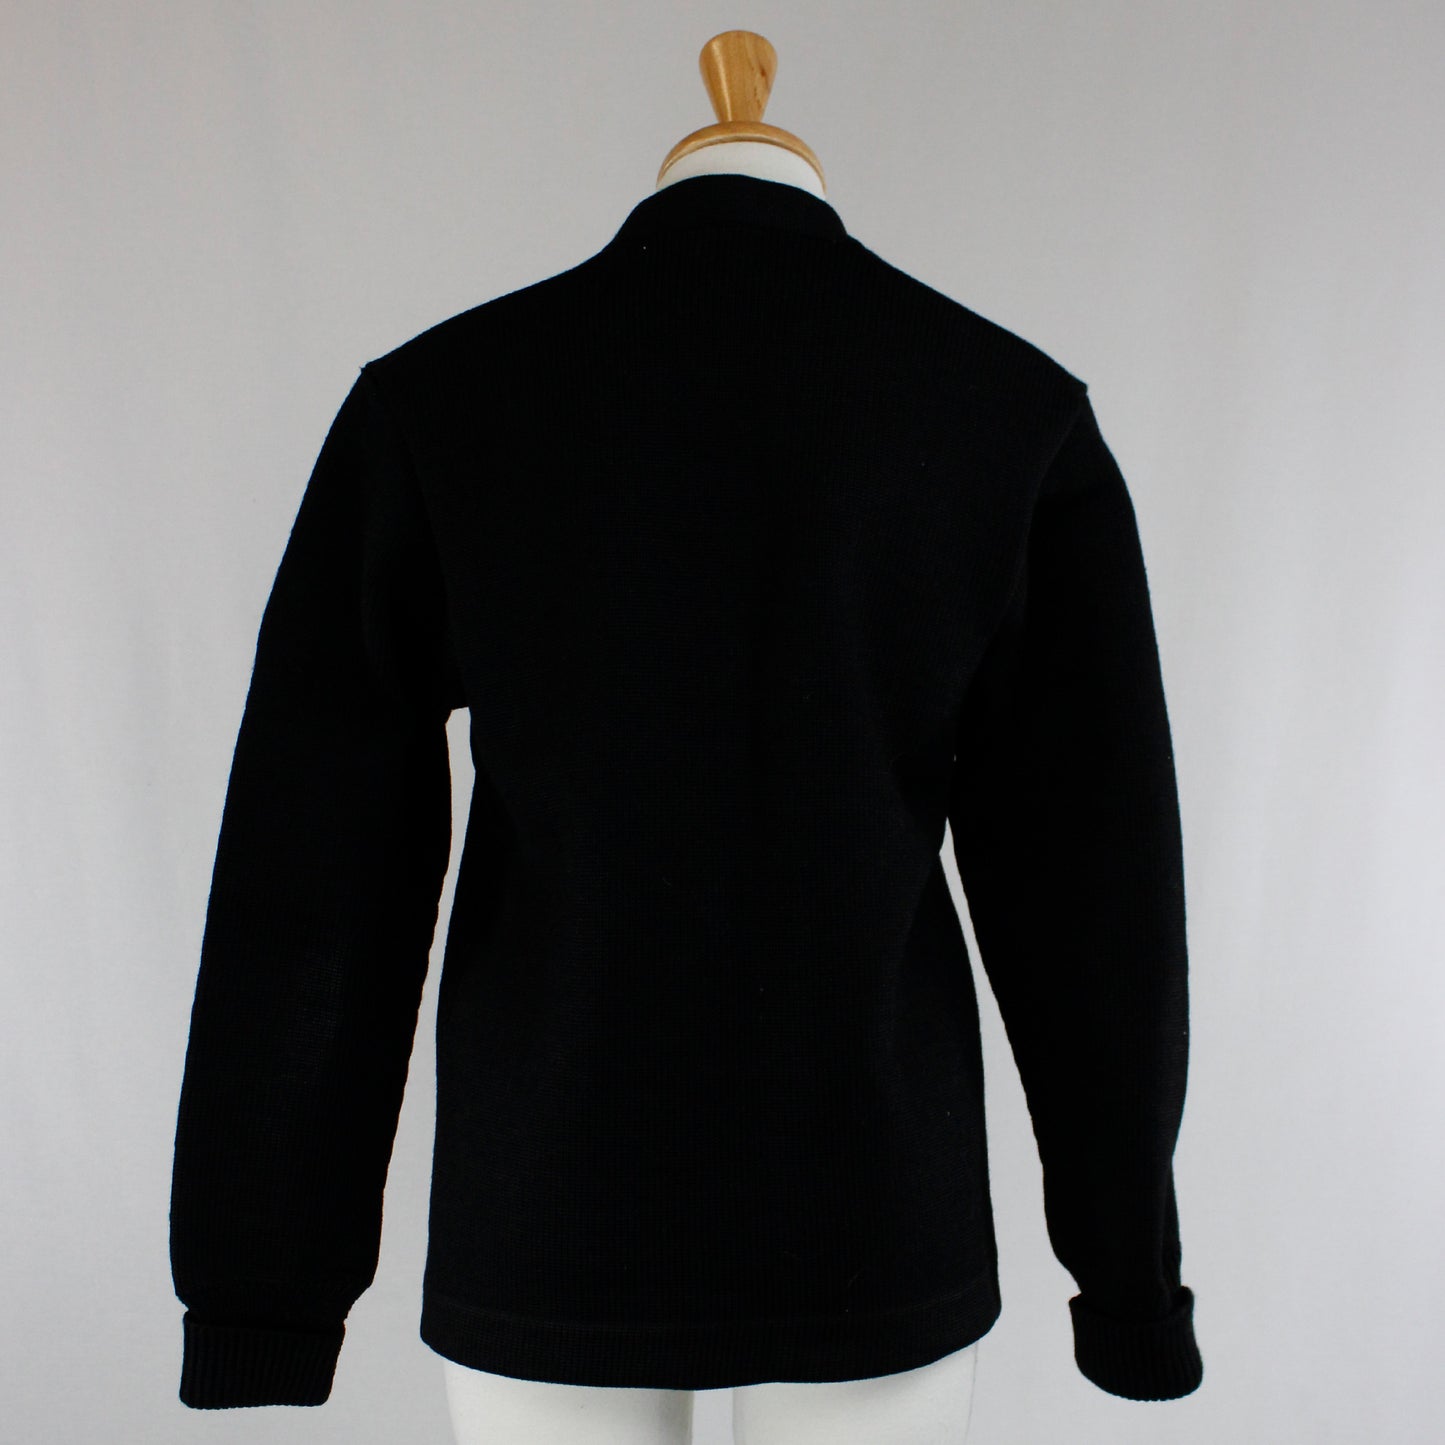 Vintage Men's 40s Letterman Sweater by Octane Knitting Co. Seattle Wool Mint Condition